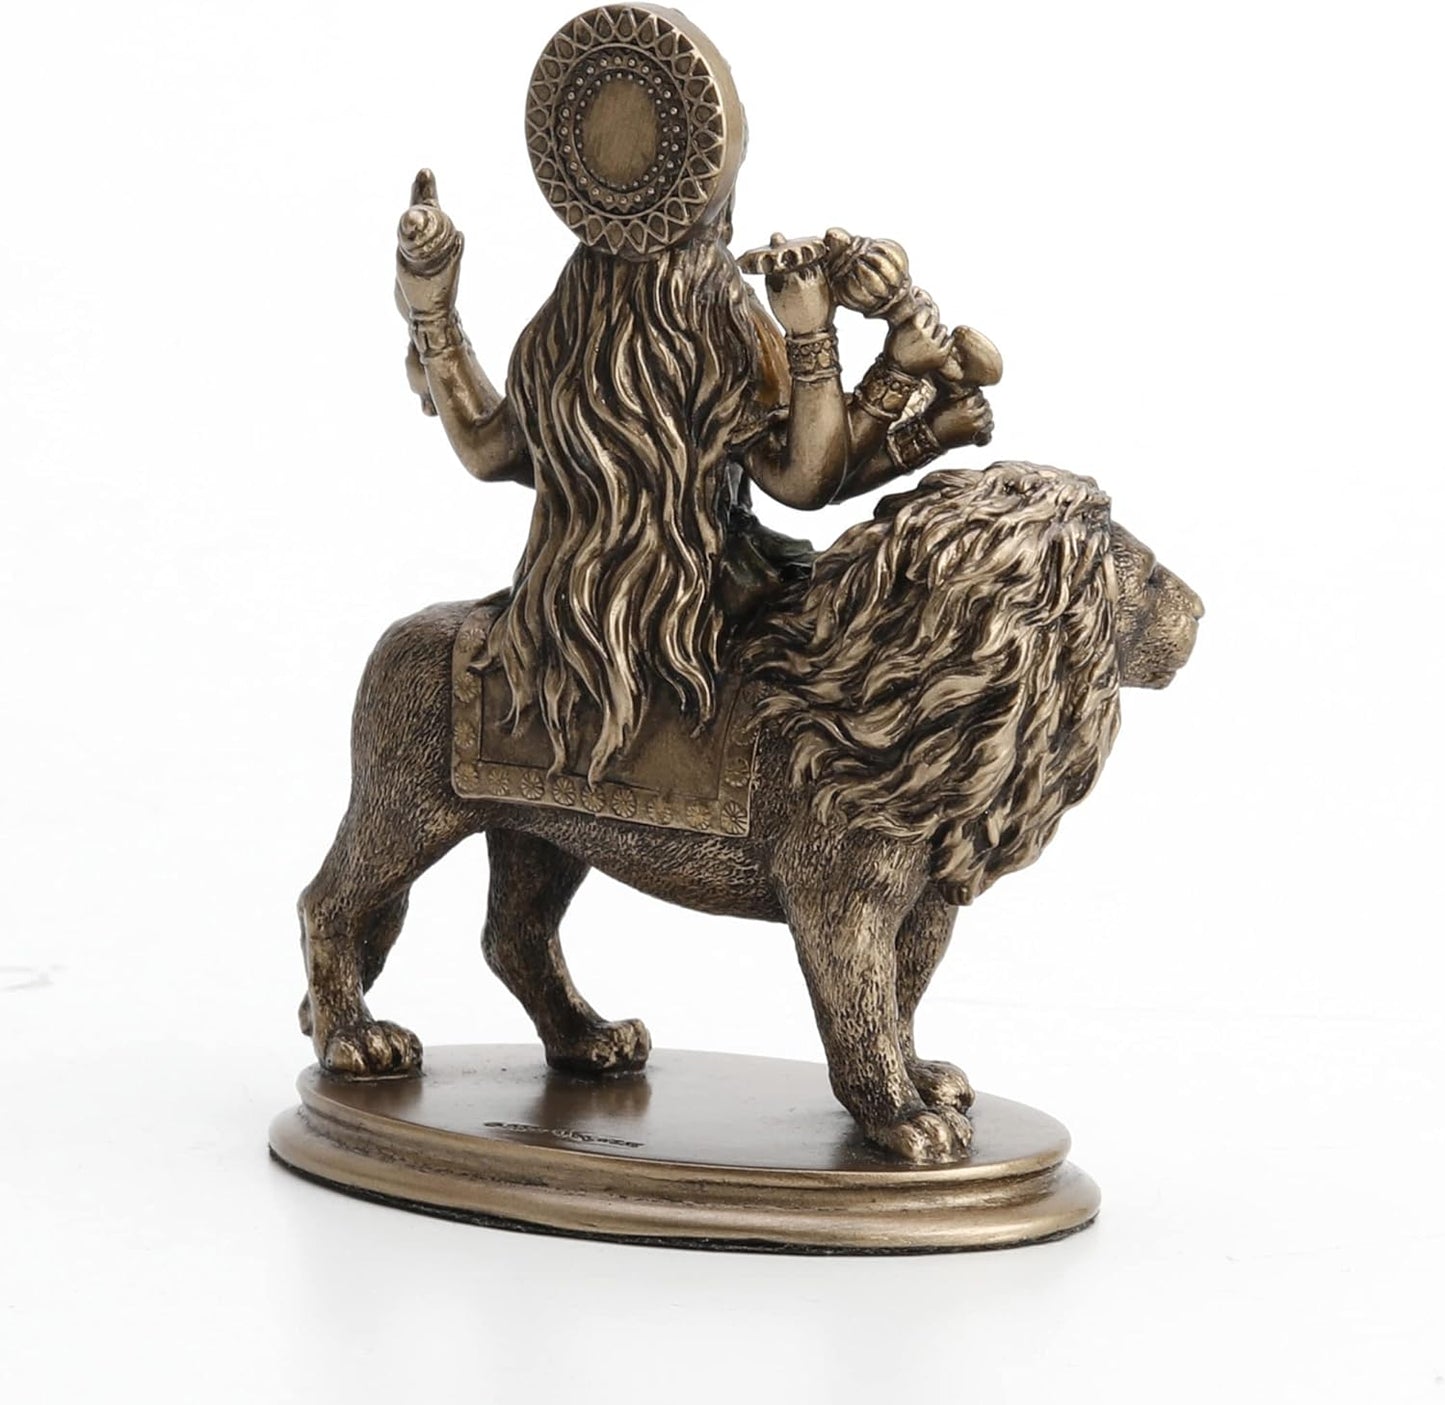 Hindu Goddess Durga Riding On Lion